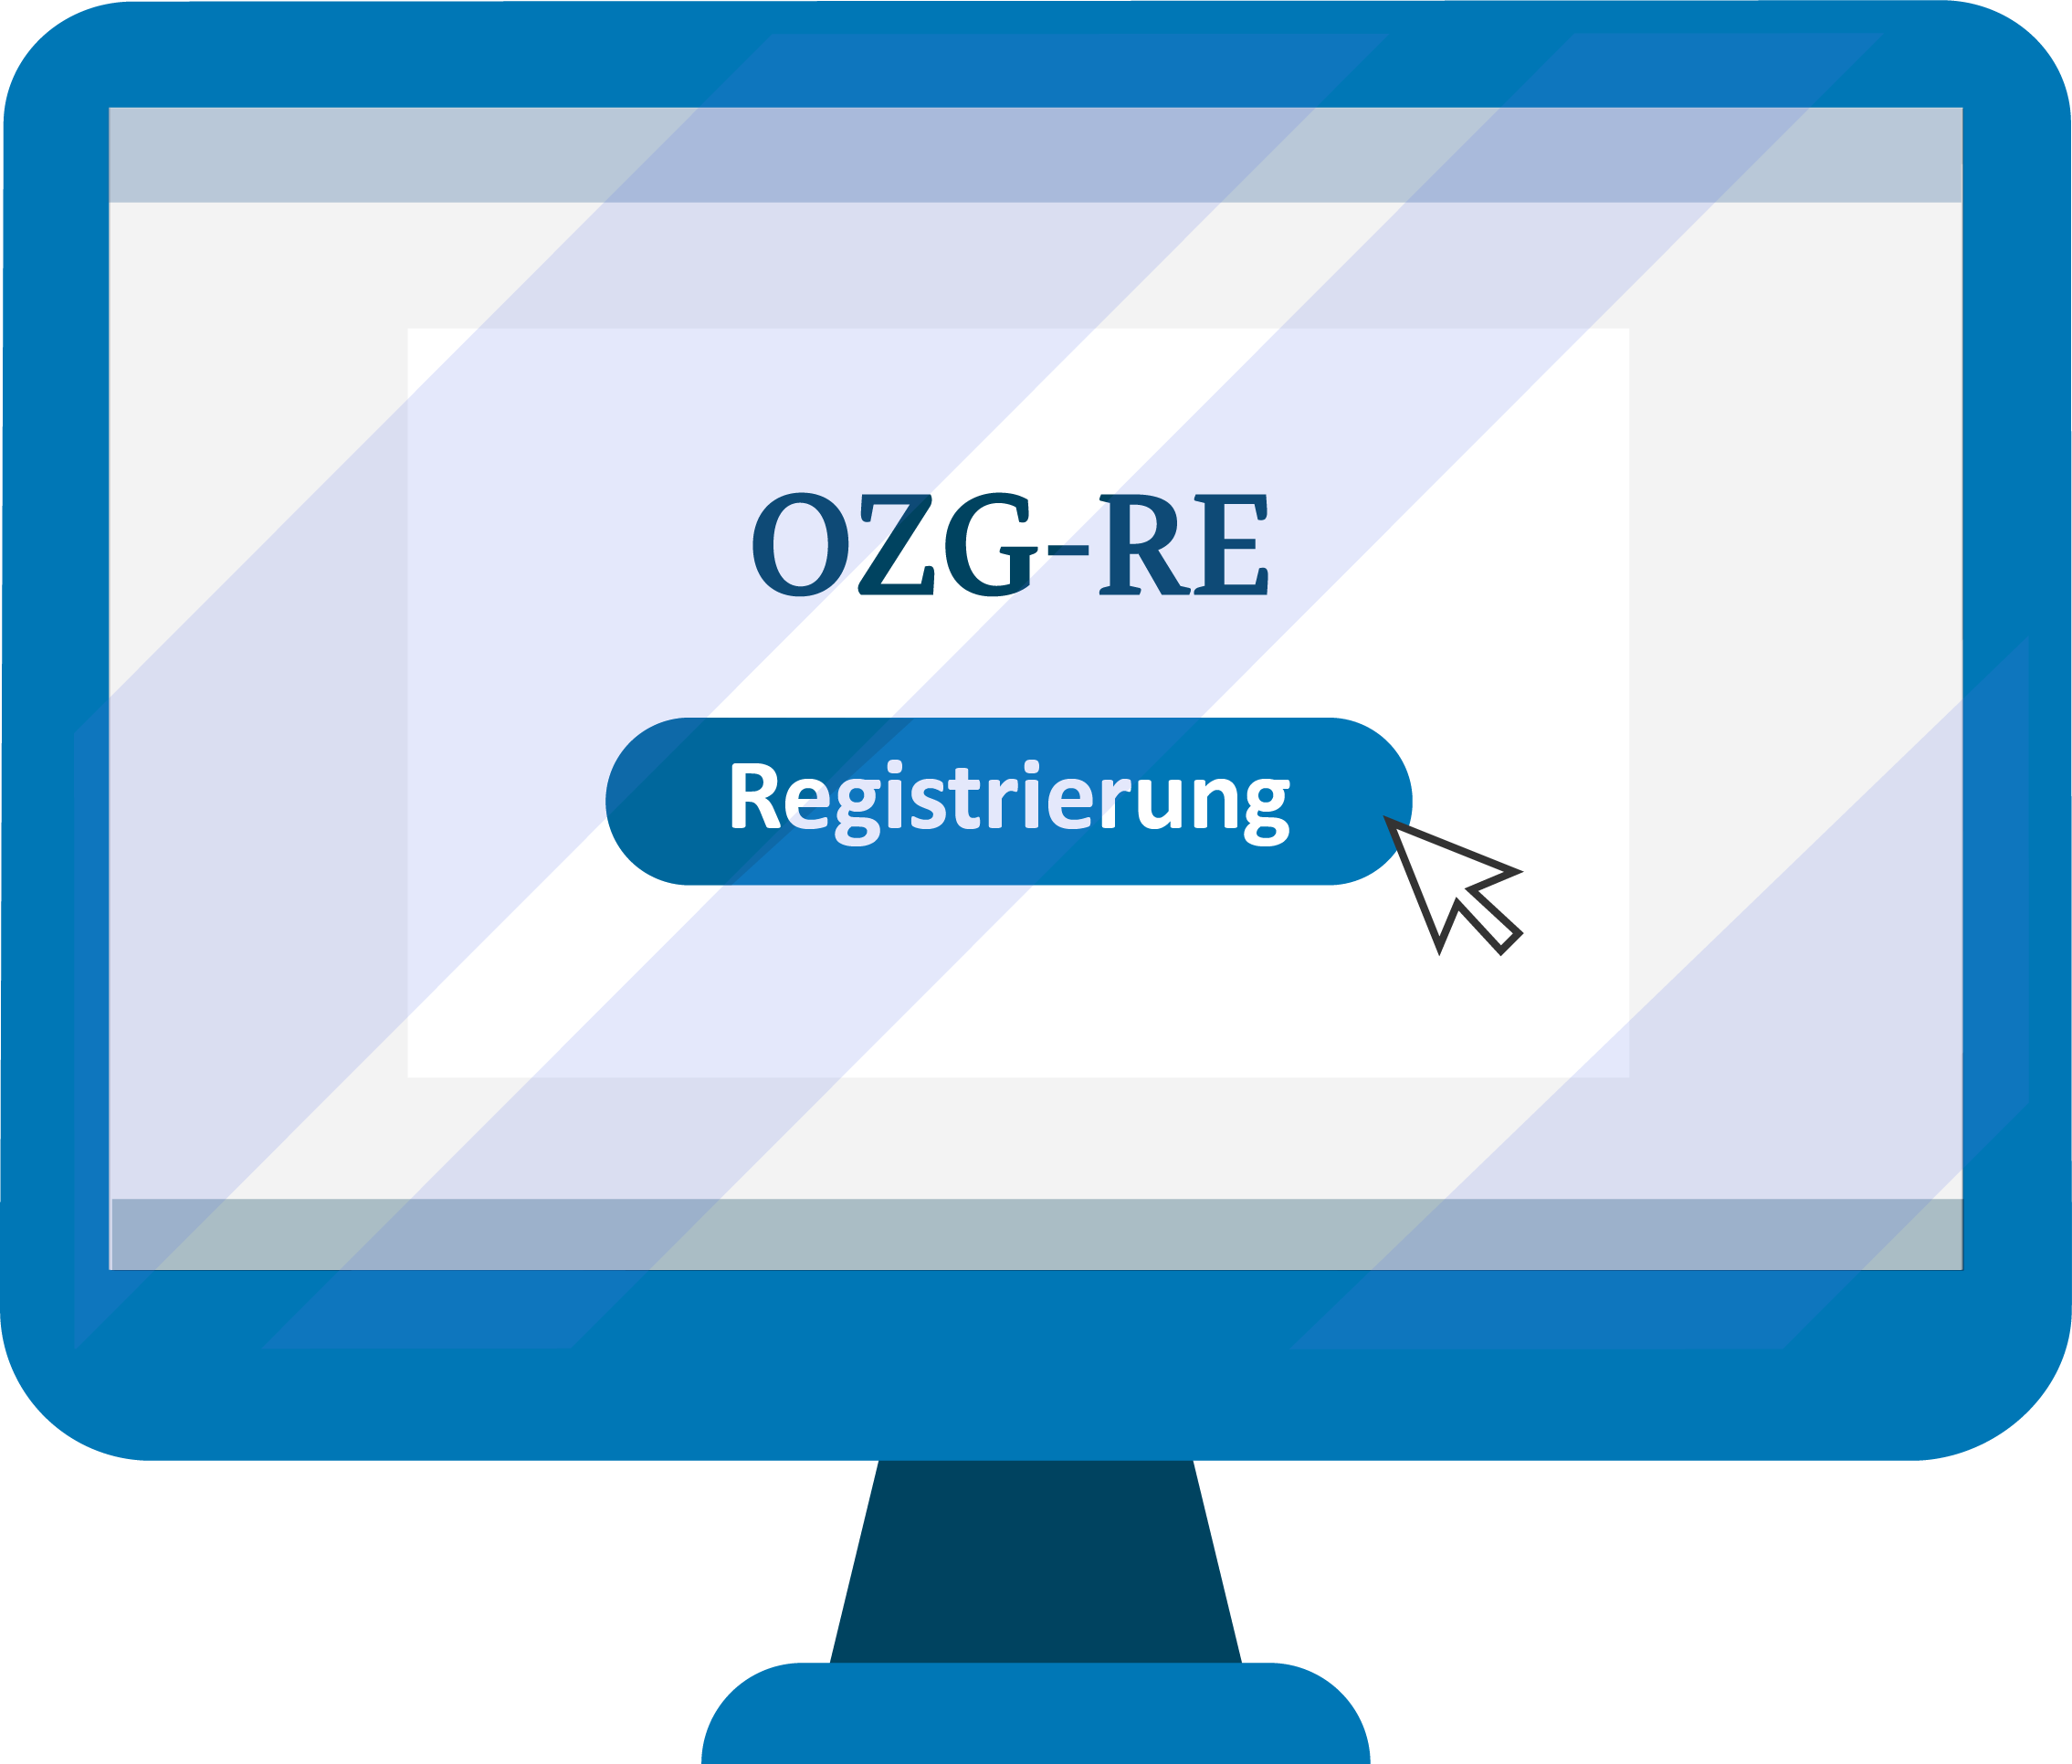 OZG-RE Registrierung